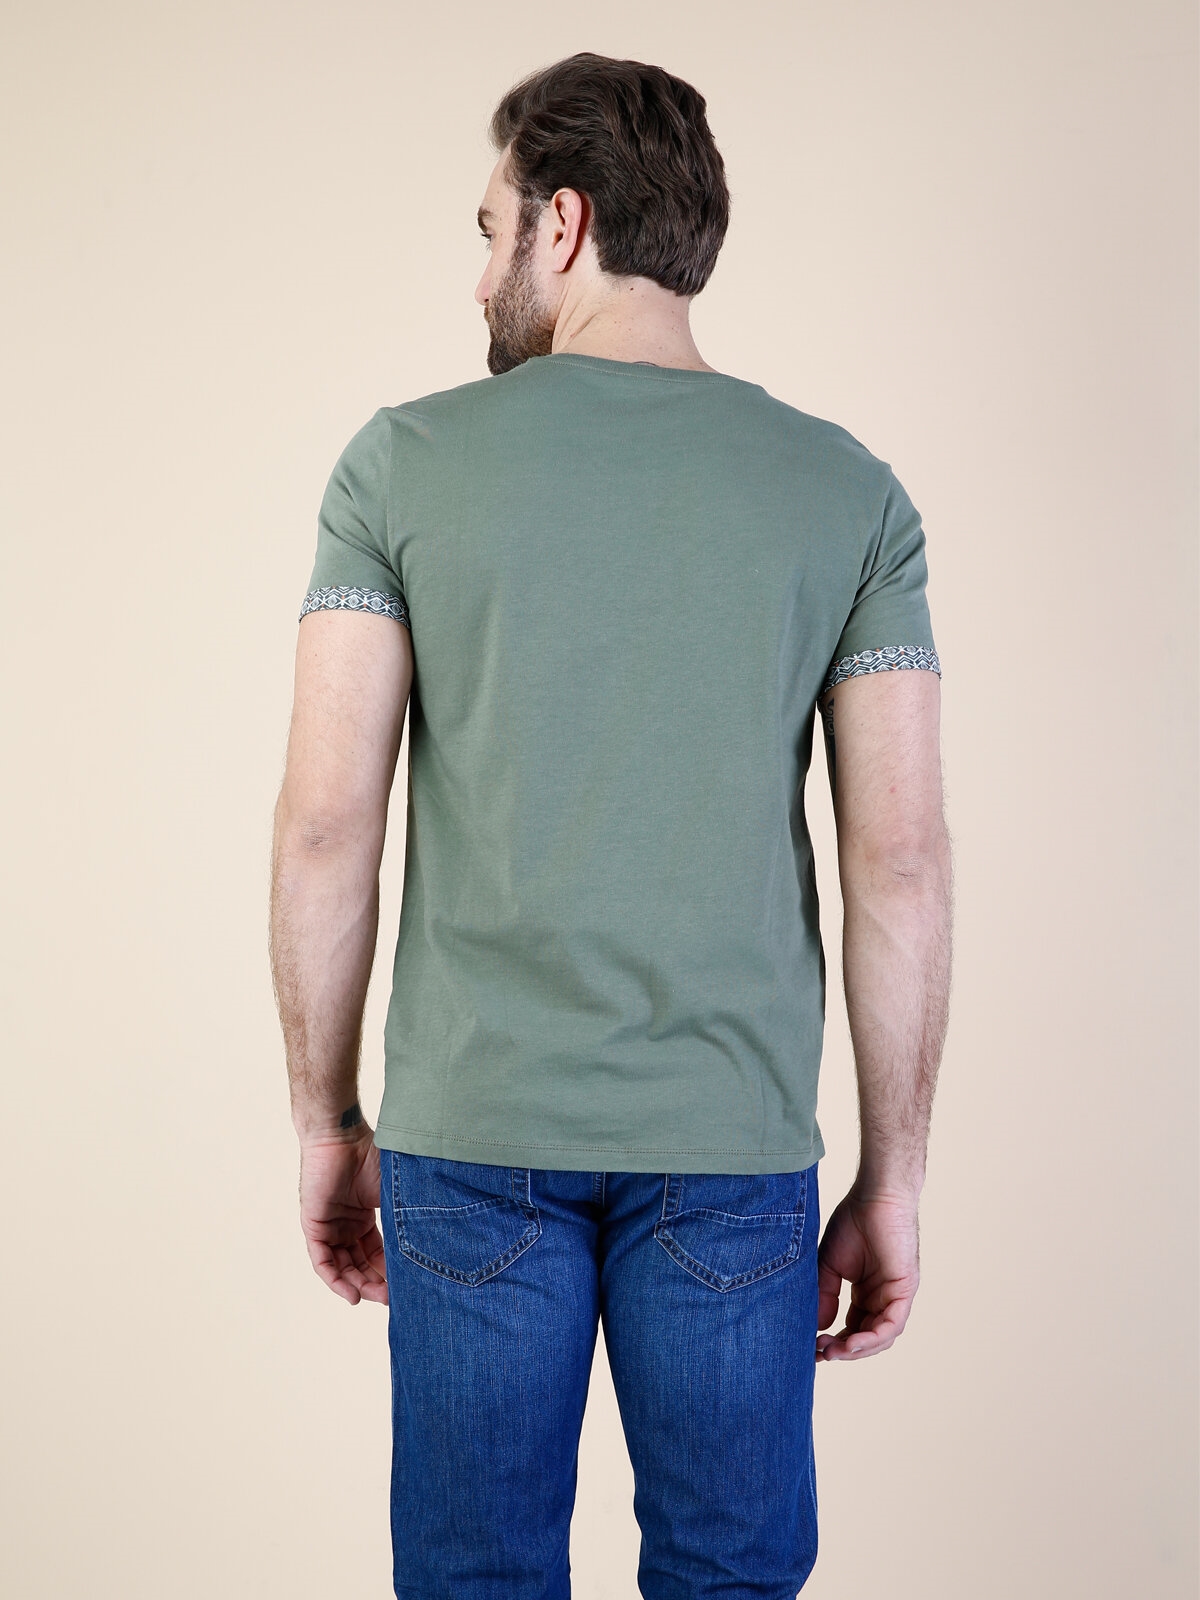 Afișați detalii pentru Verde Barbati Tricou Cu Maneca Scurta Regular Fit